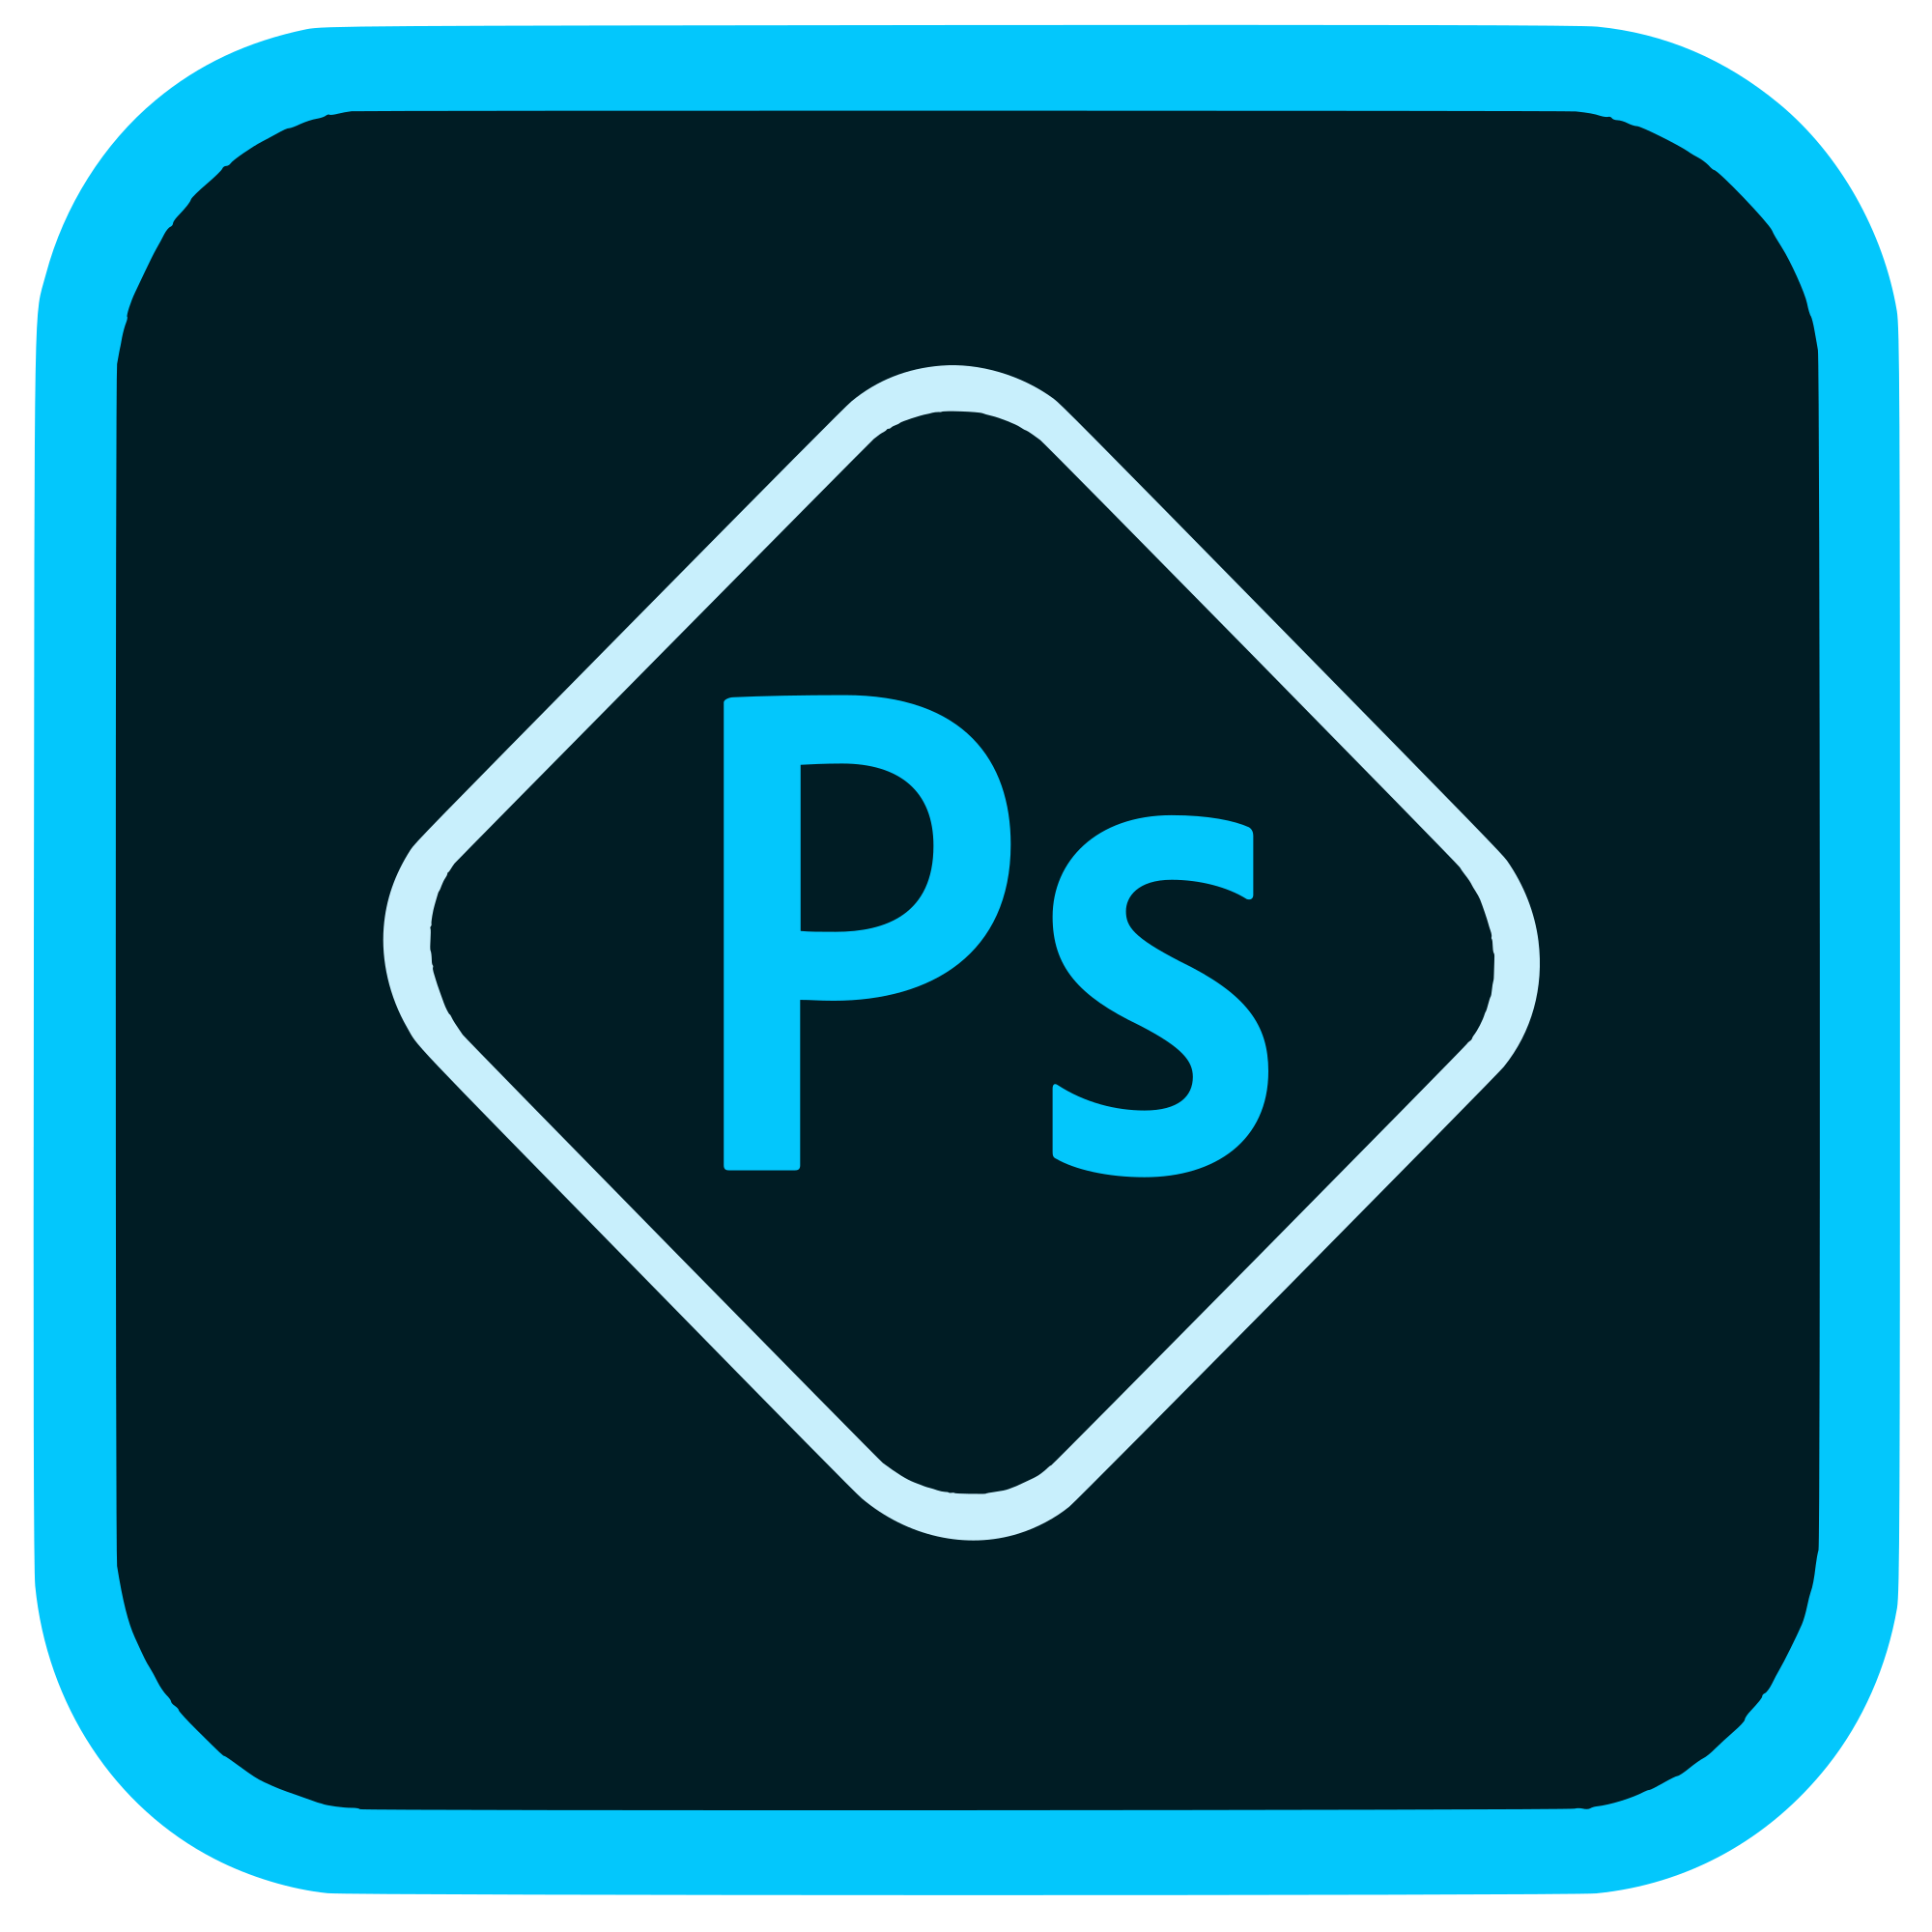 Adobe Photoshop Logo - File:Adobe Photoshop Express logo.svg - Wikimedia Commons